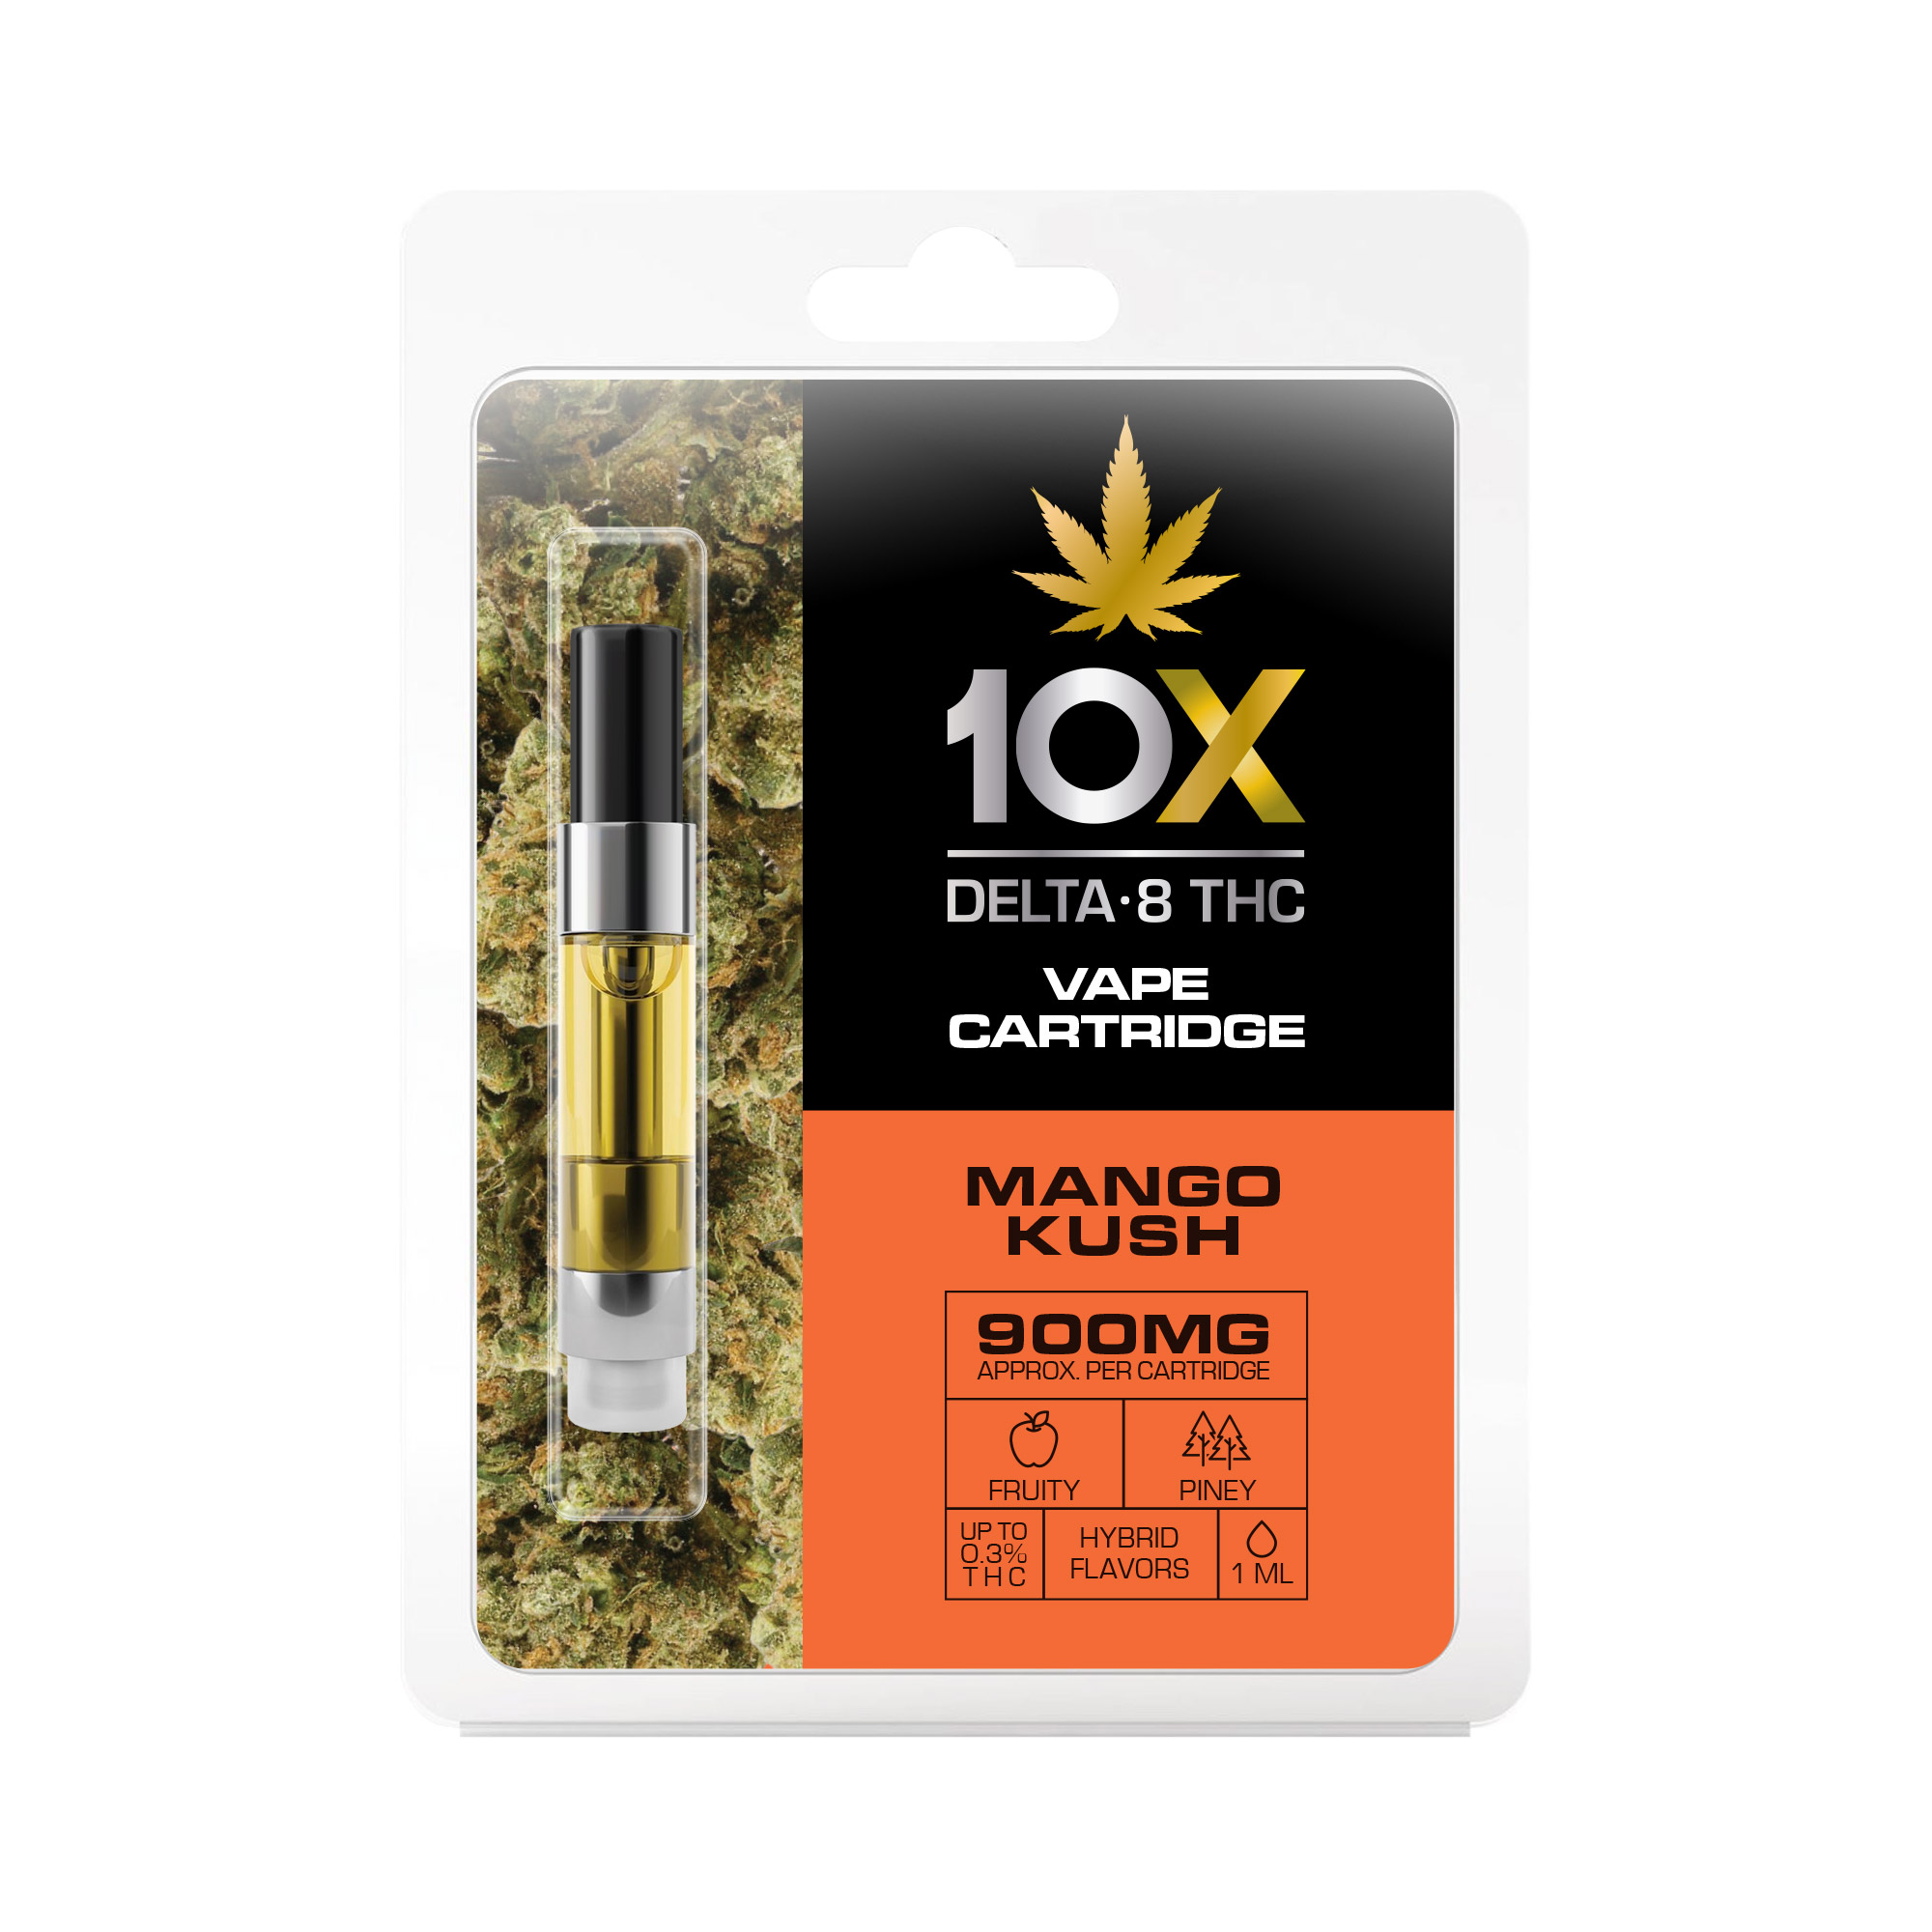 10X Delta-8 THC - Mango Kush Vape Cartridge - 900mg (1ml) - Diamond CBD